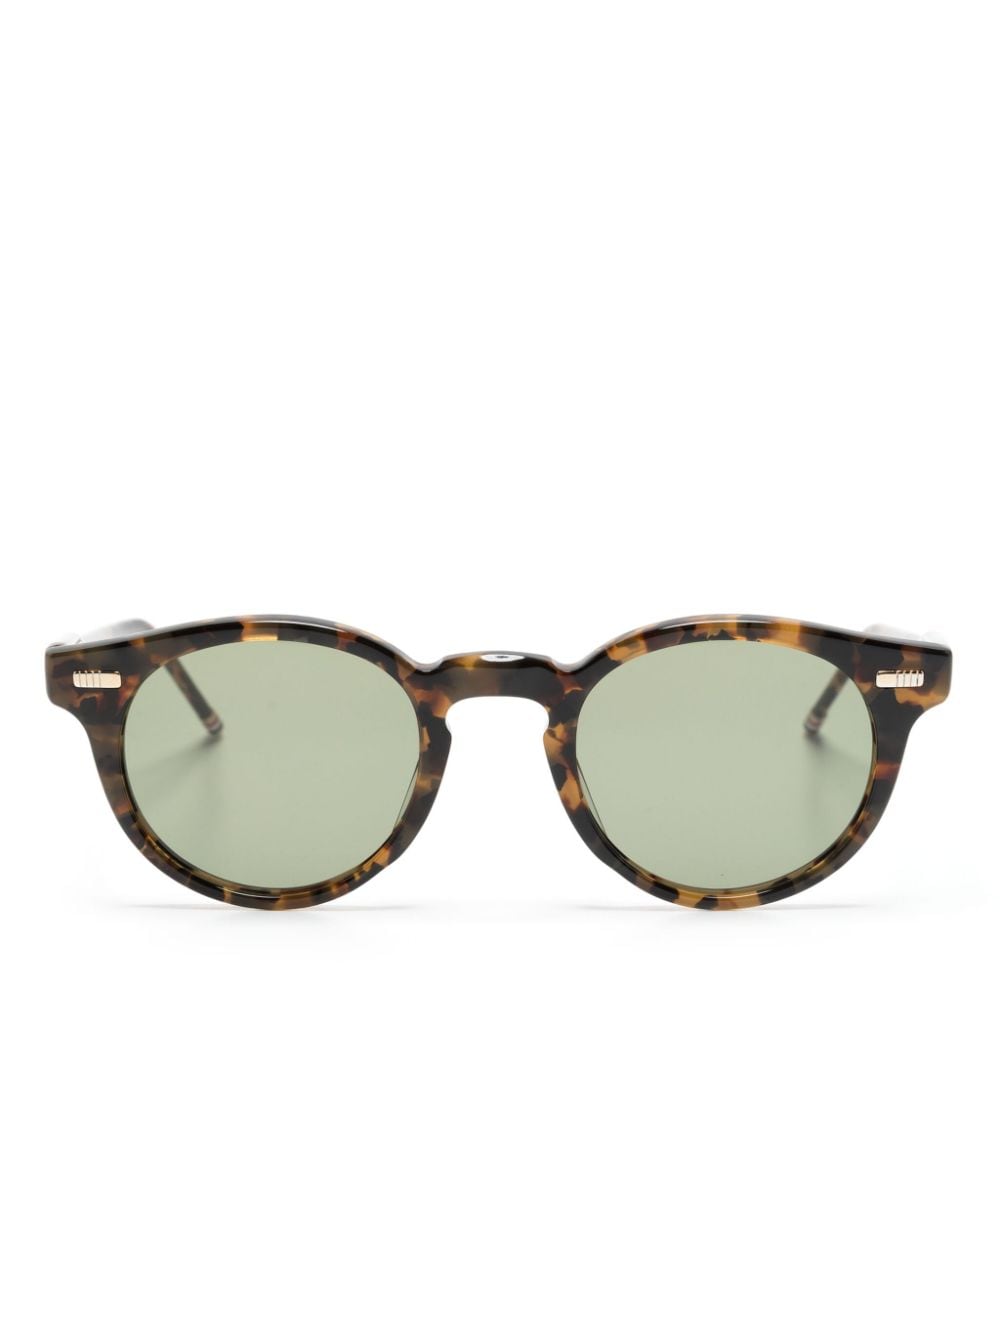 Thom Browne Eyewear tortoiseshell round-frame sunglasses von Thom Browne Eyewear